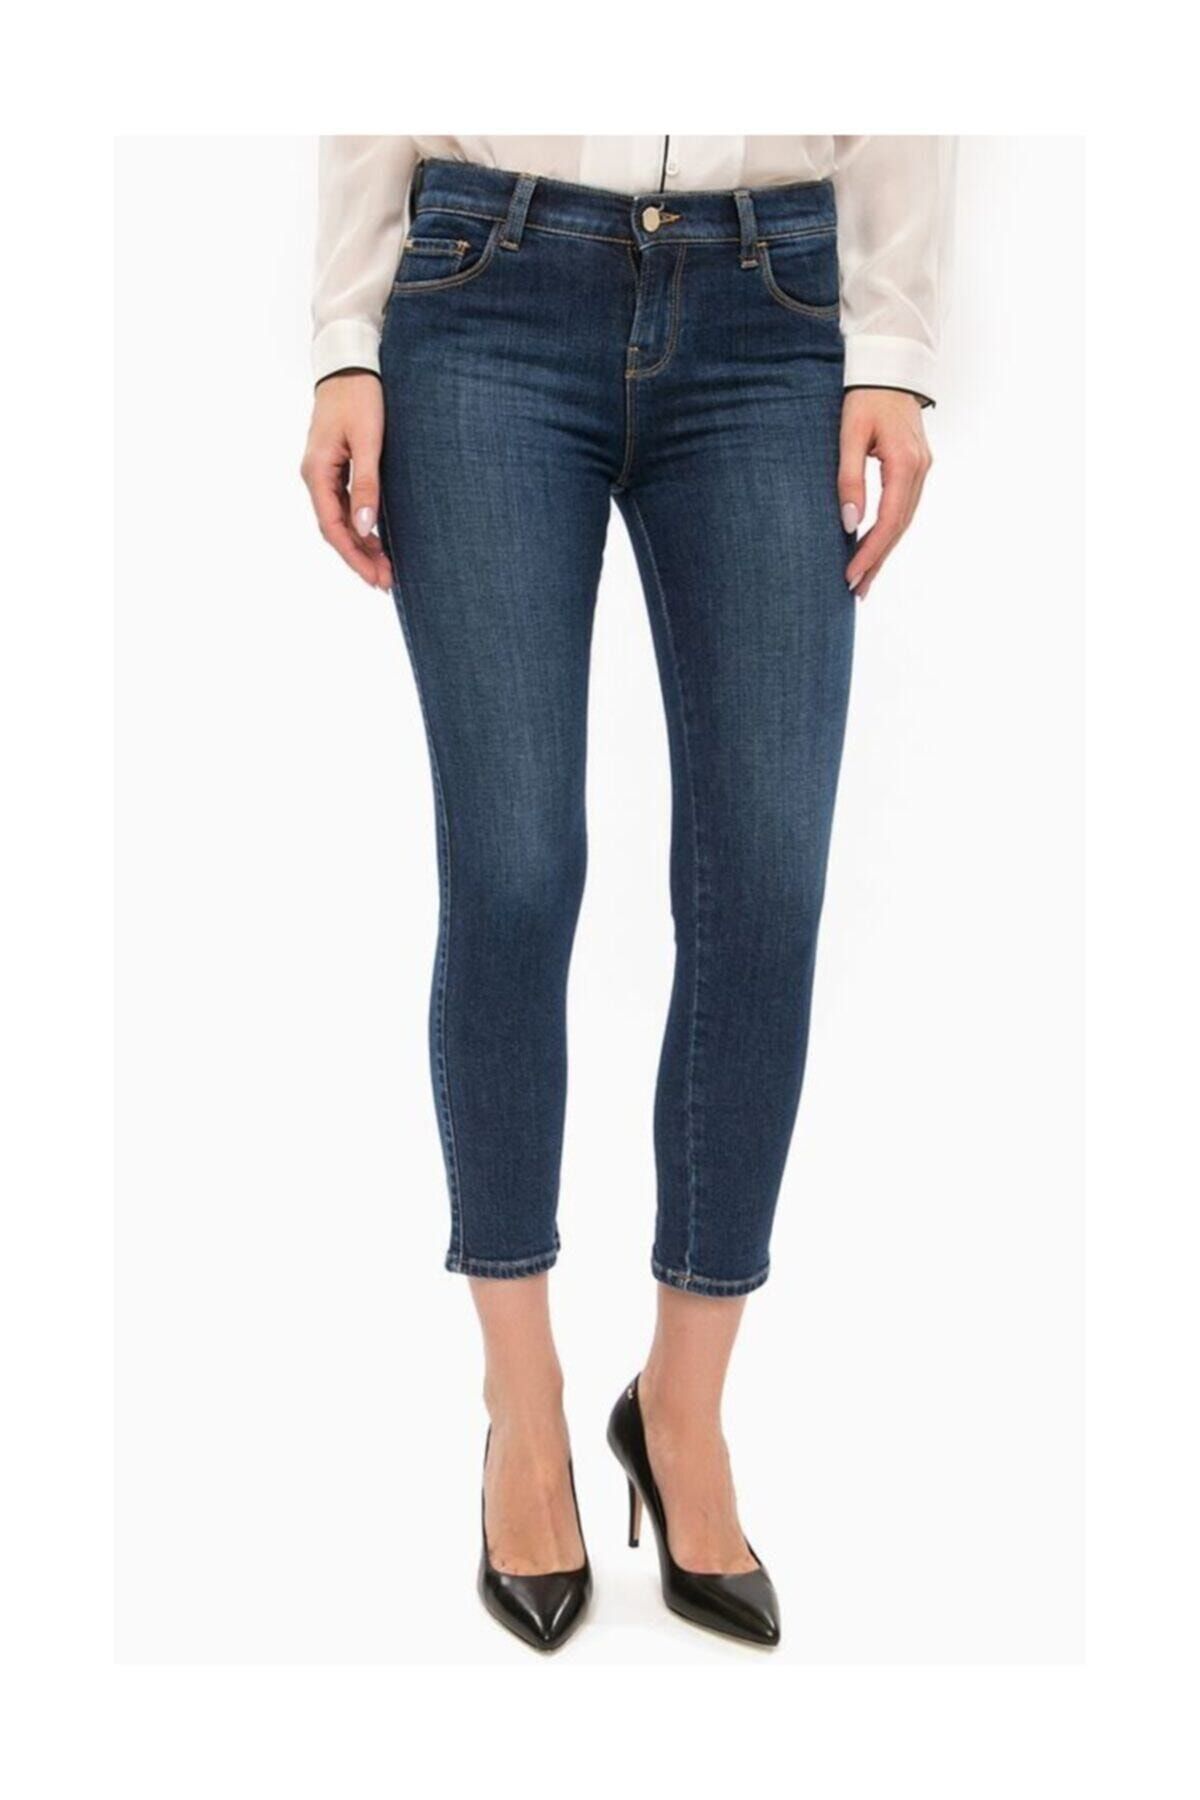 Armani Jeans Kadın Mavi Jeans Pantolon